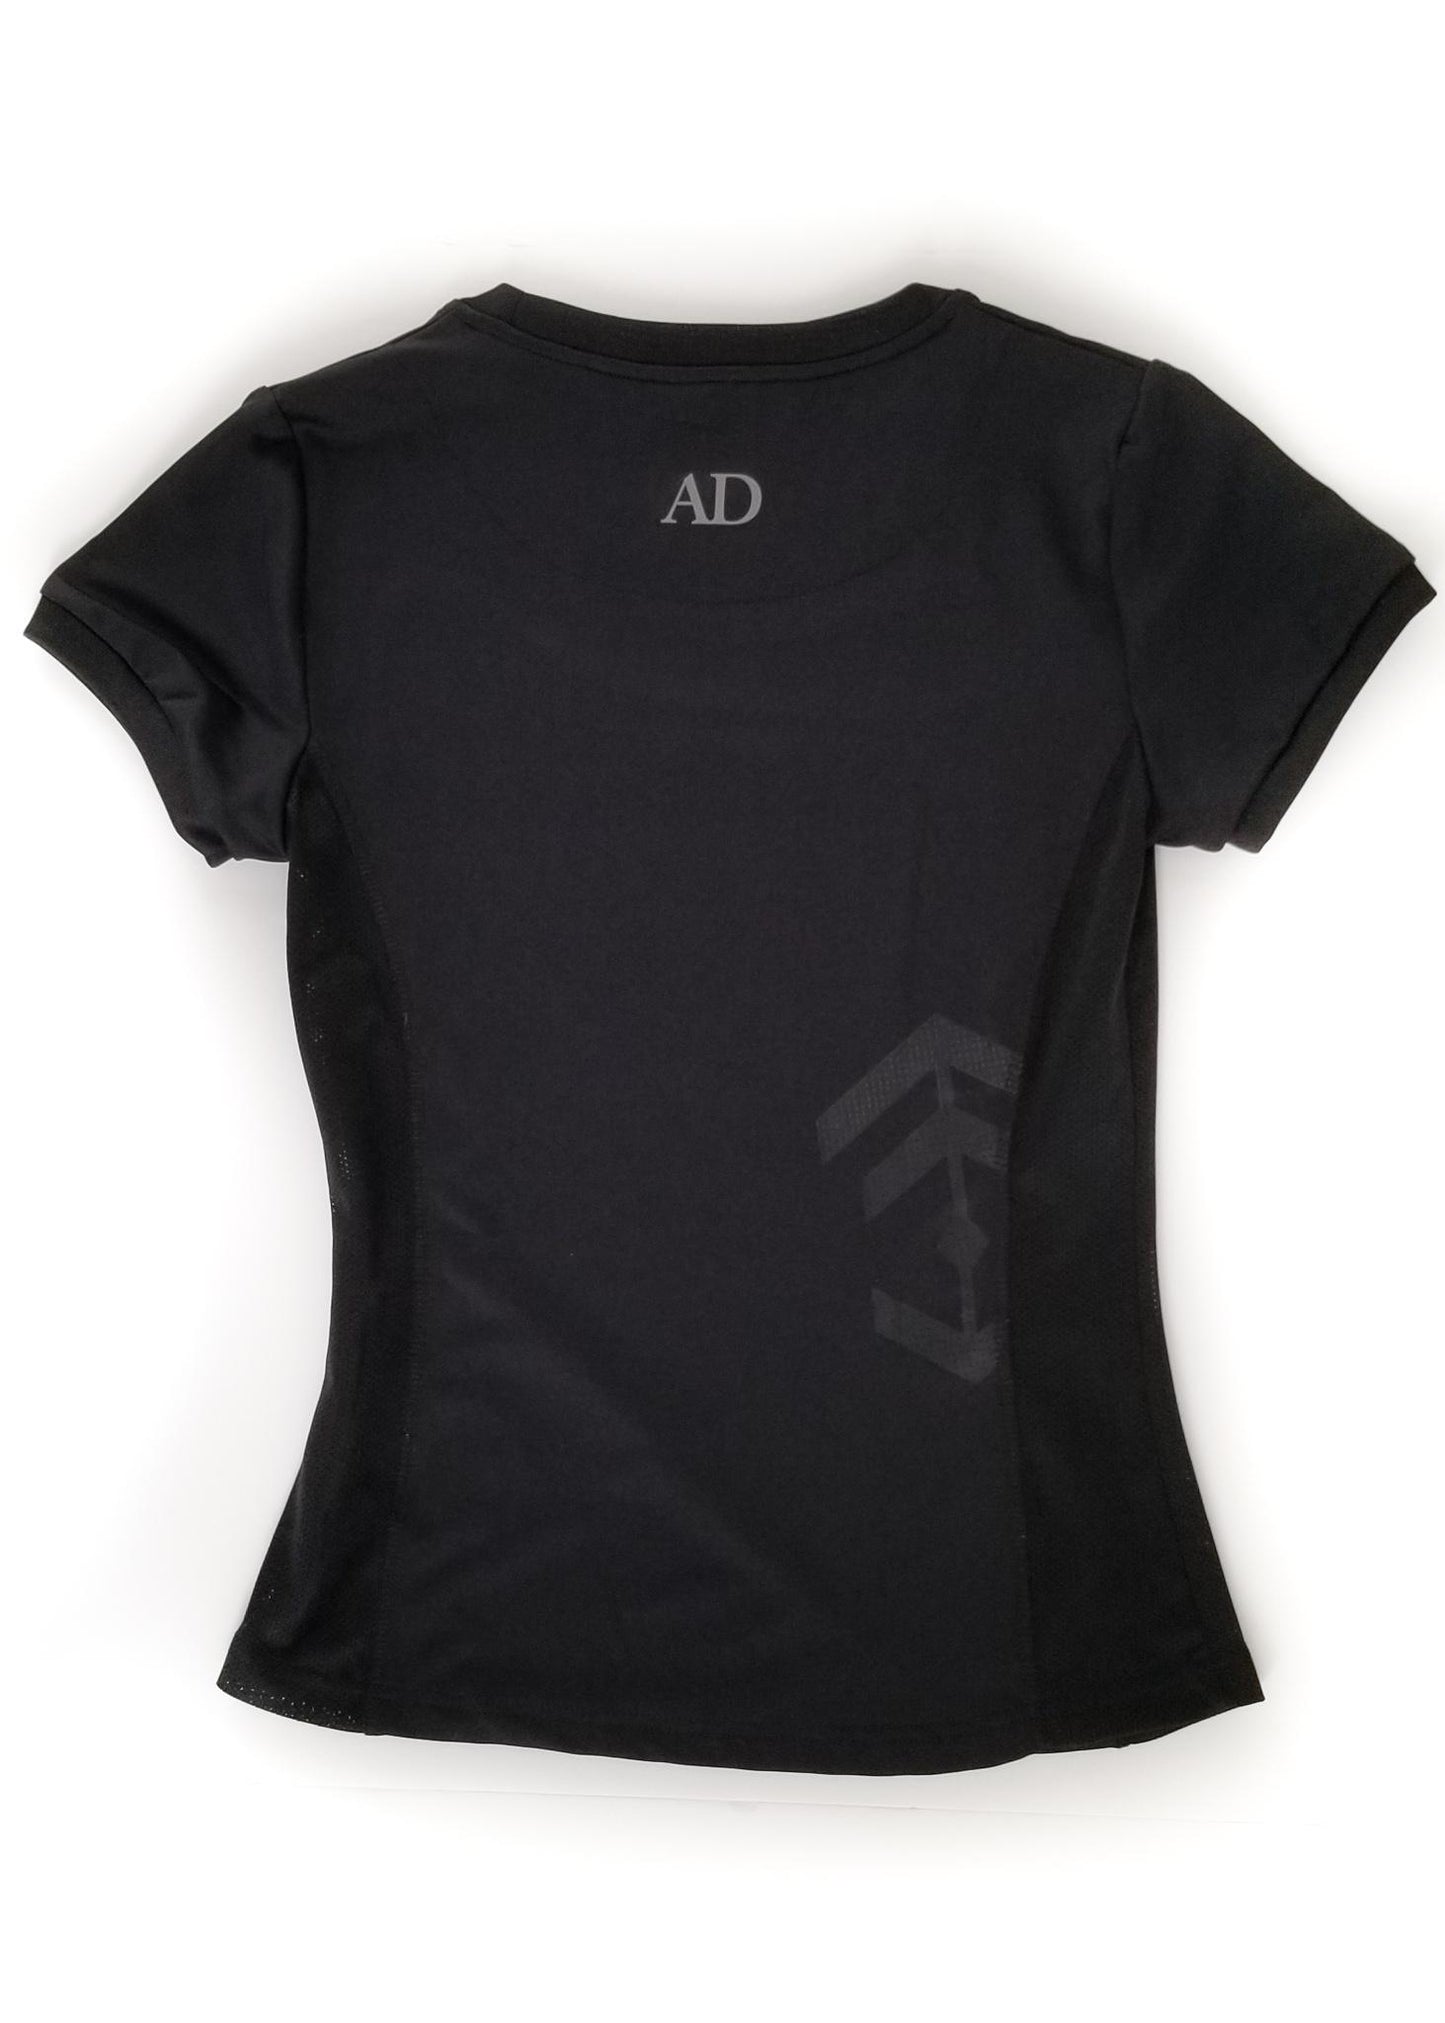 Aztec Diamond Technical T Shirt - Black - Women's Small